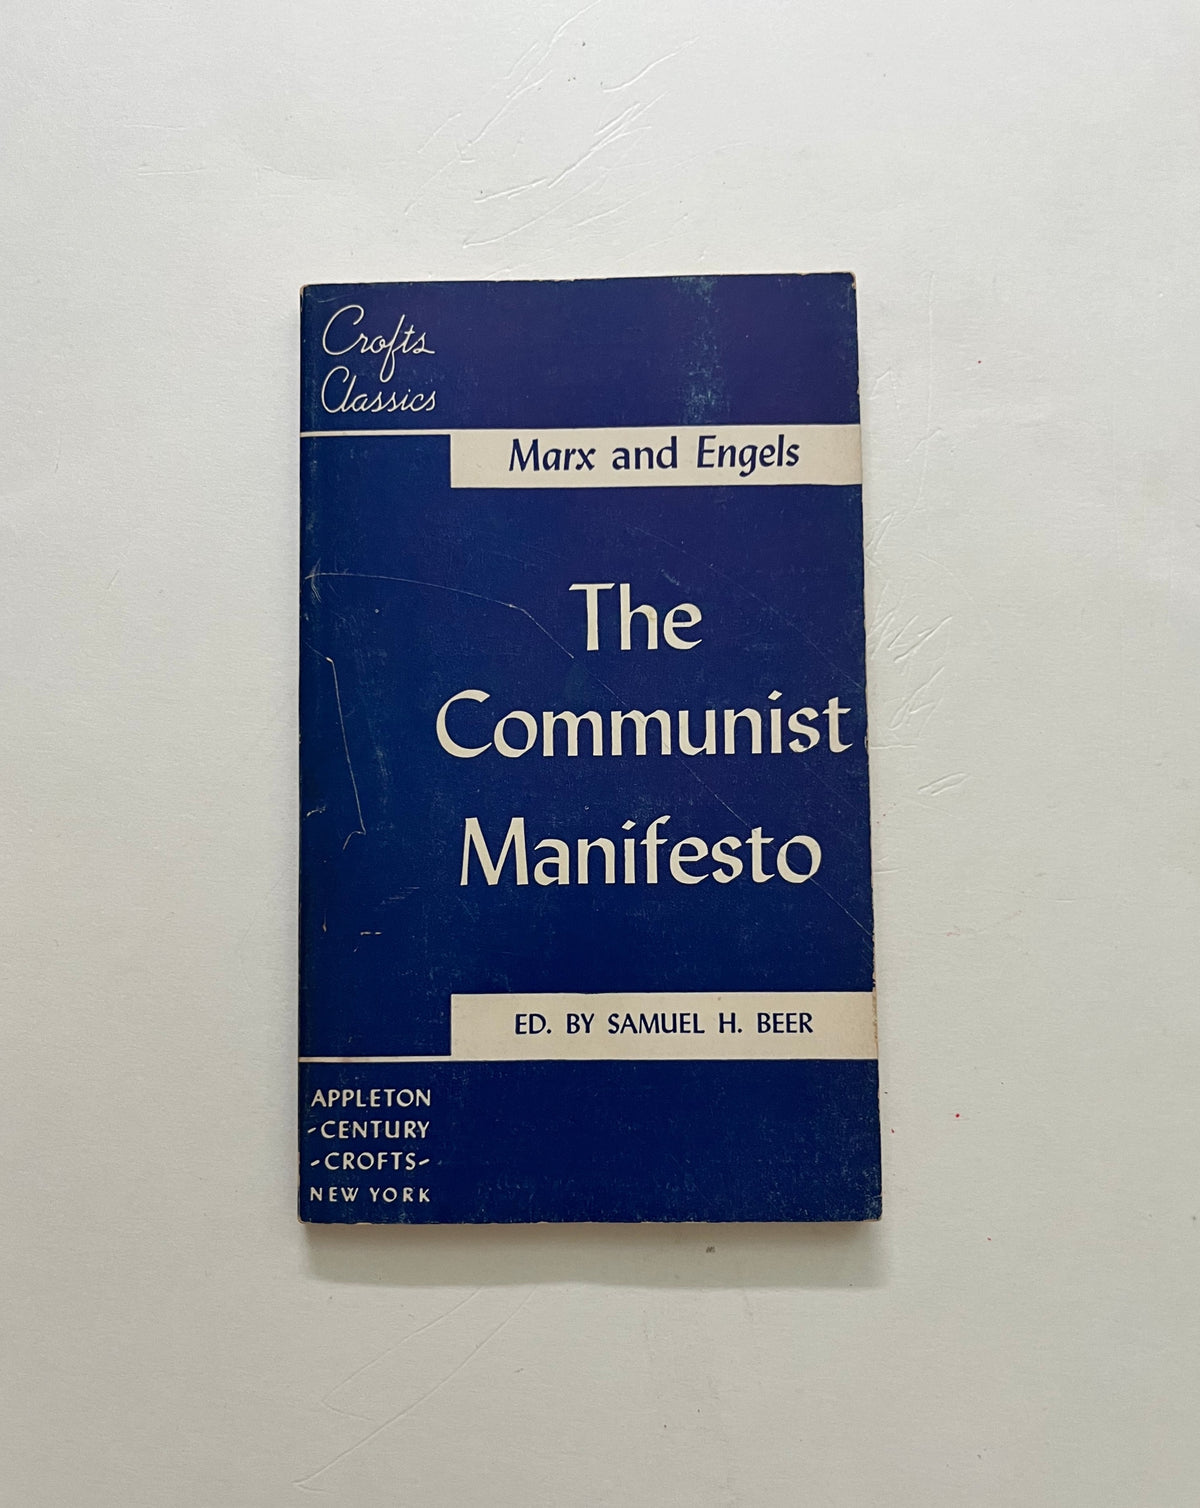 The Communist Manifesto by Karl Marx &amp; Frederick Engels